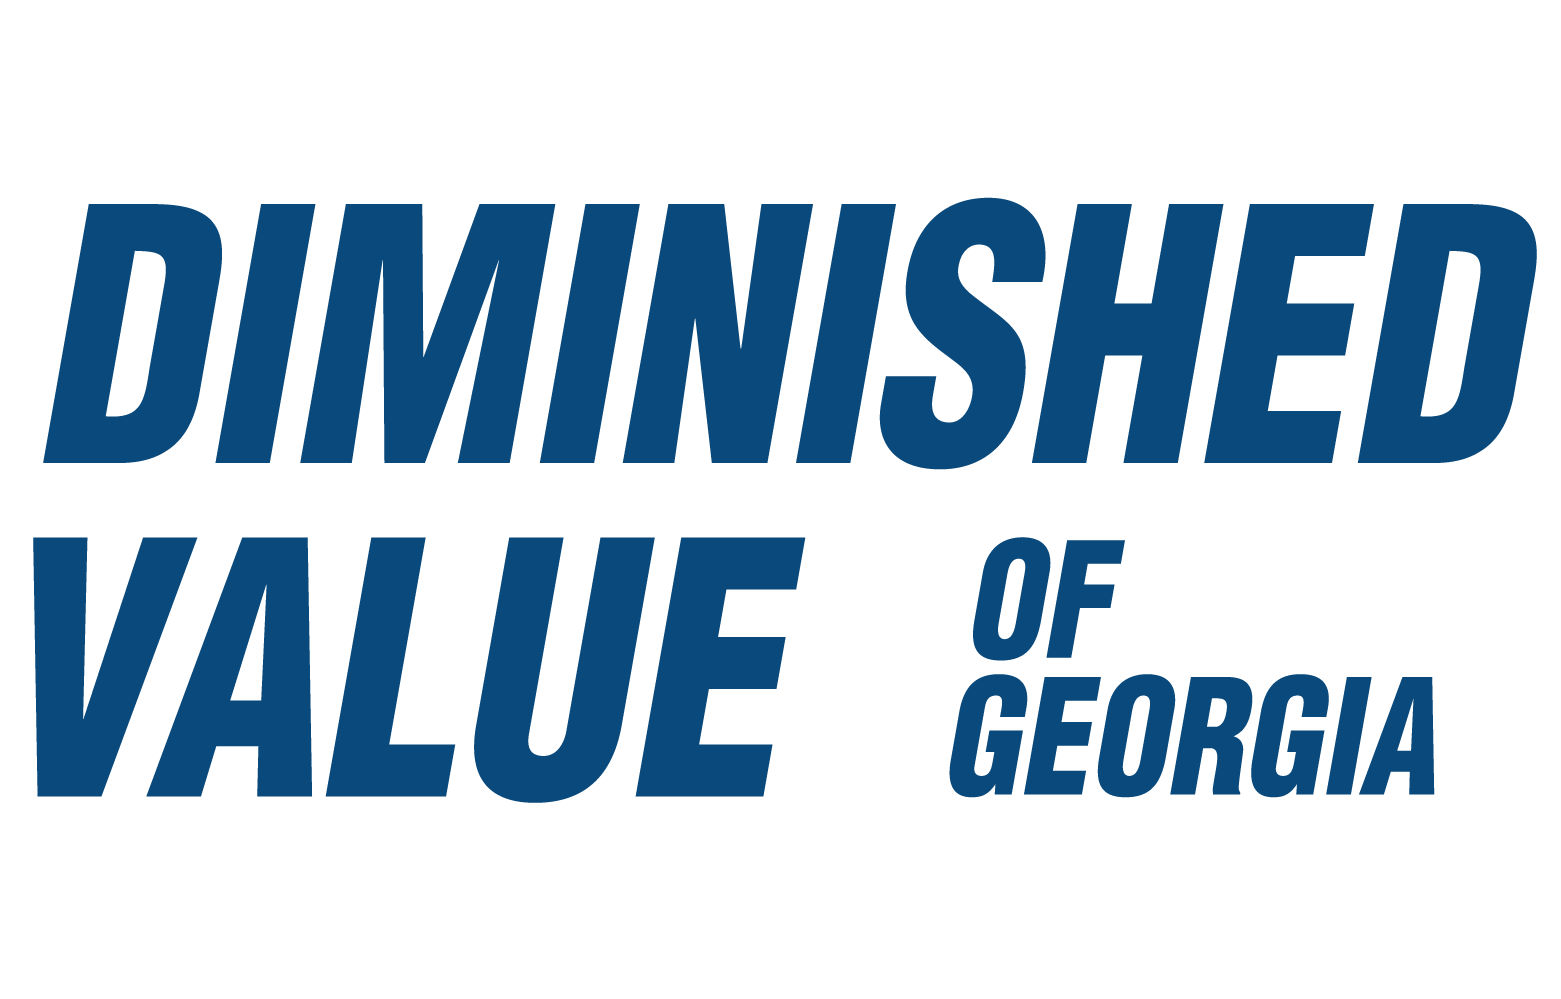 Diminished Value of Georgia